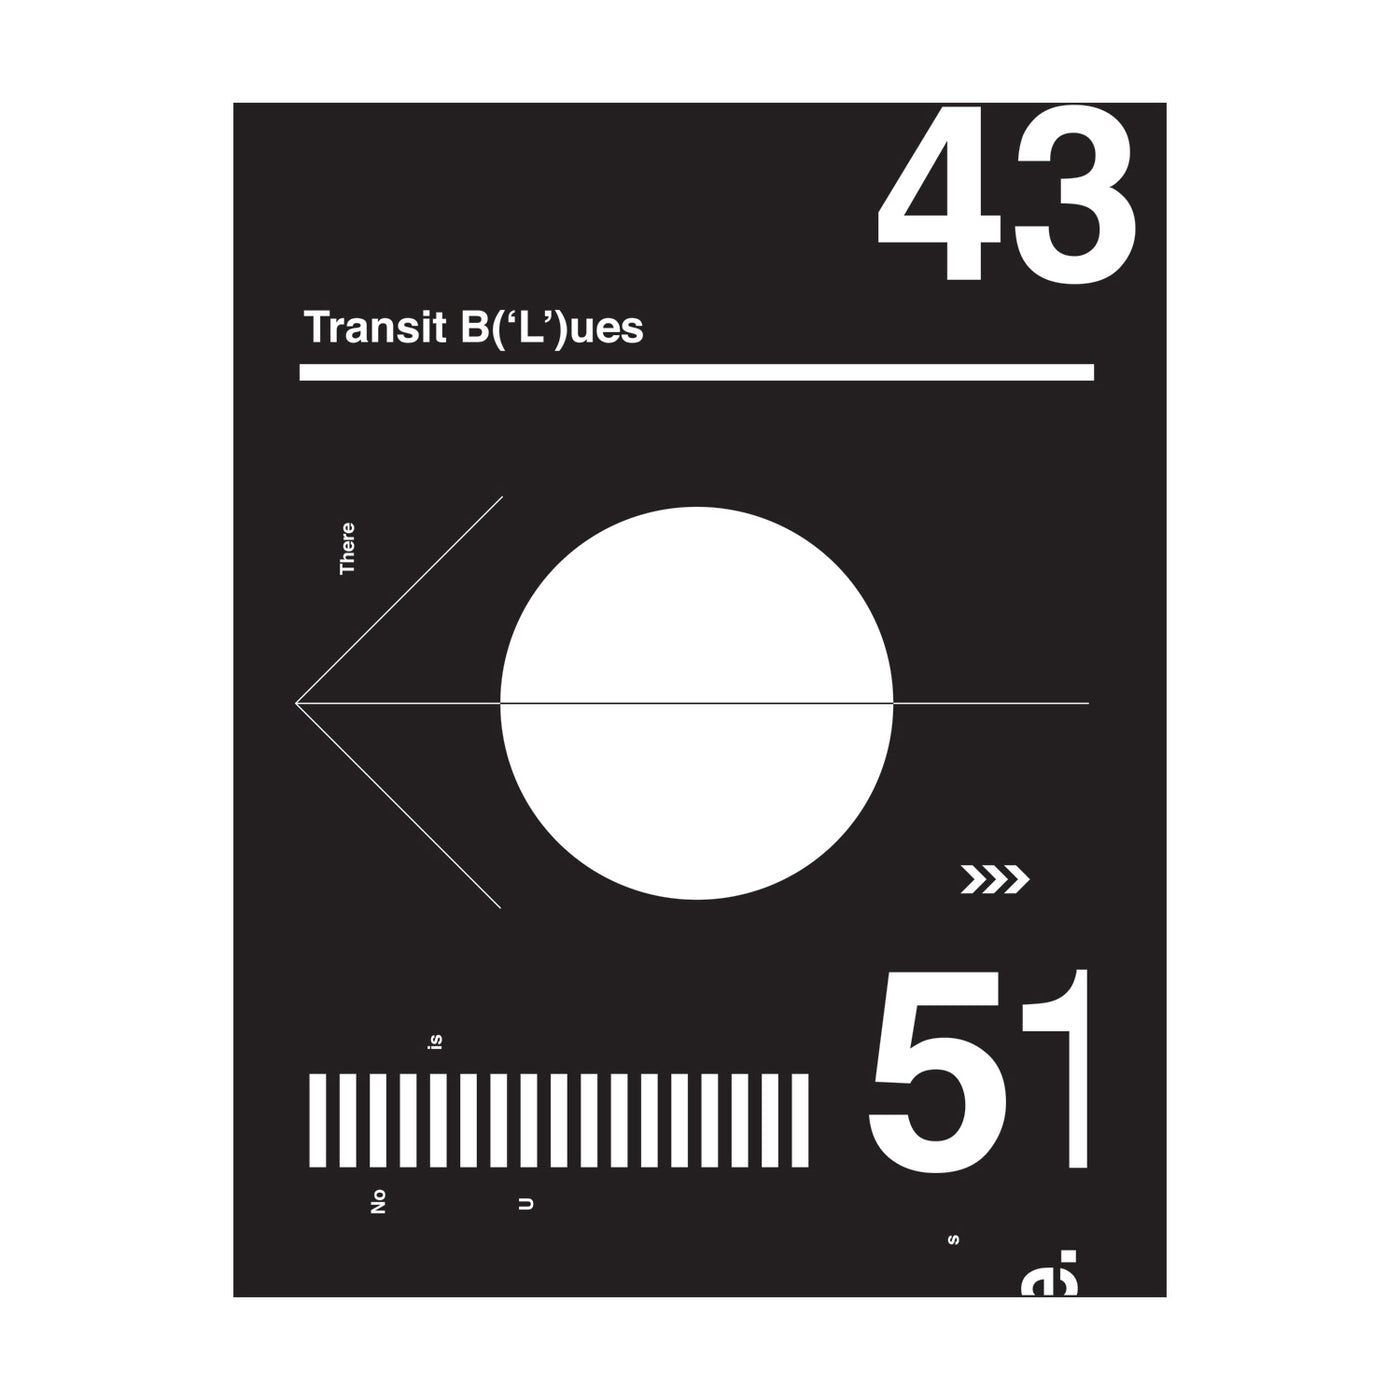 Transit Blues 18"X24" Screen-Printed Poster